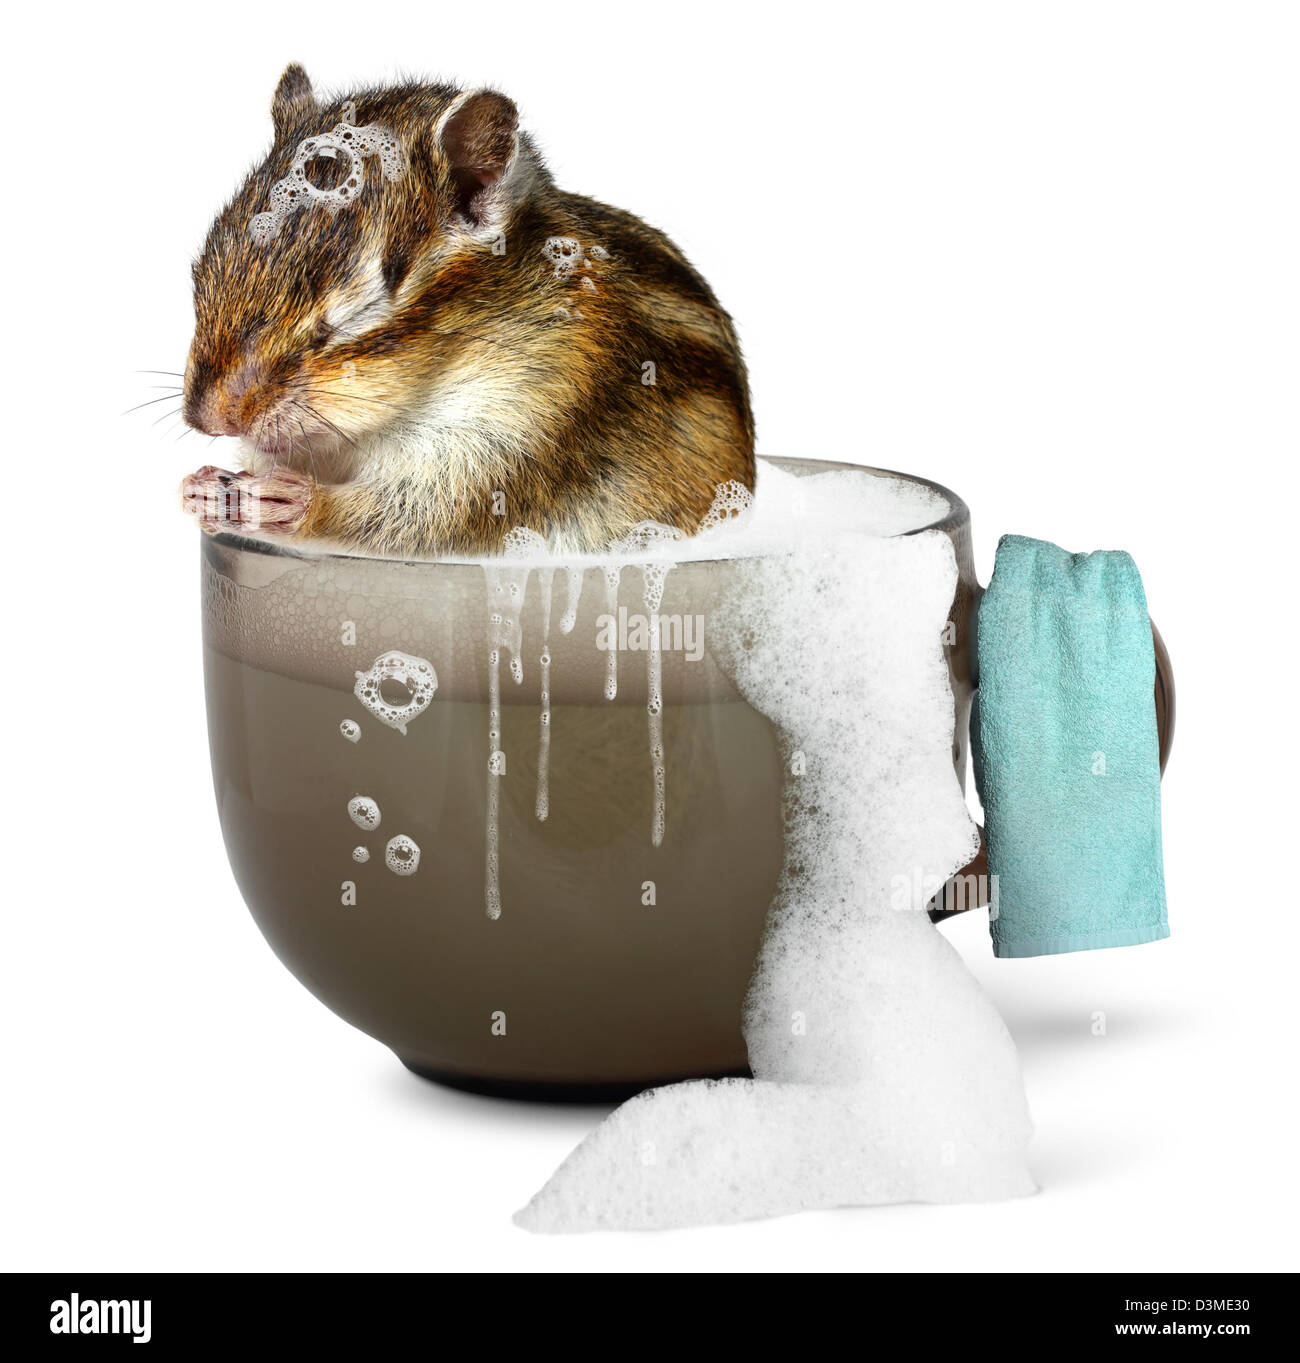 Funny chipmunk taking a bath, bathroom concept Stock Photo